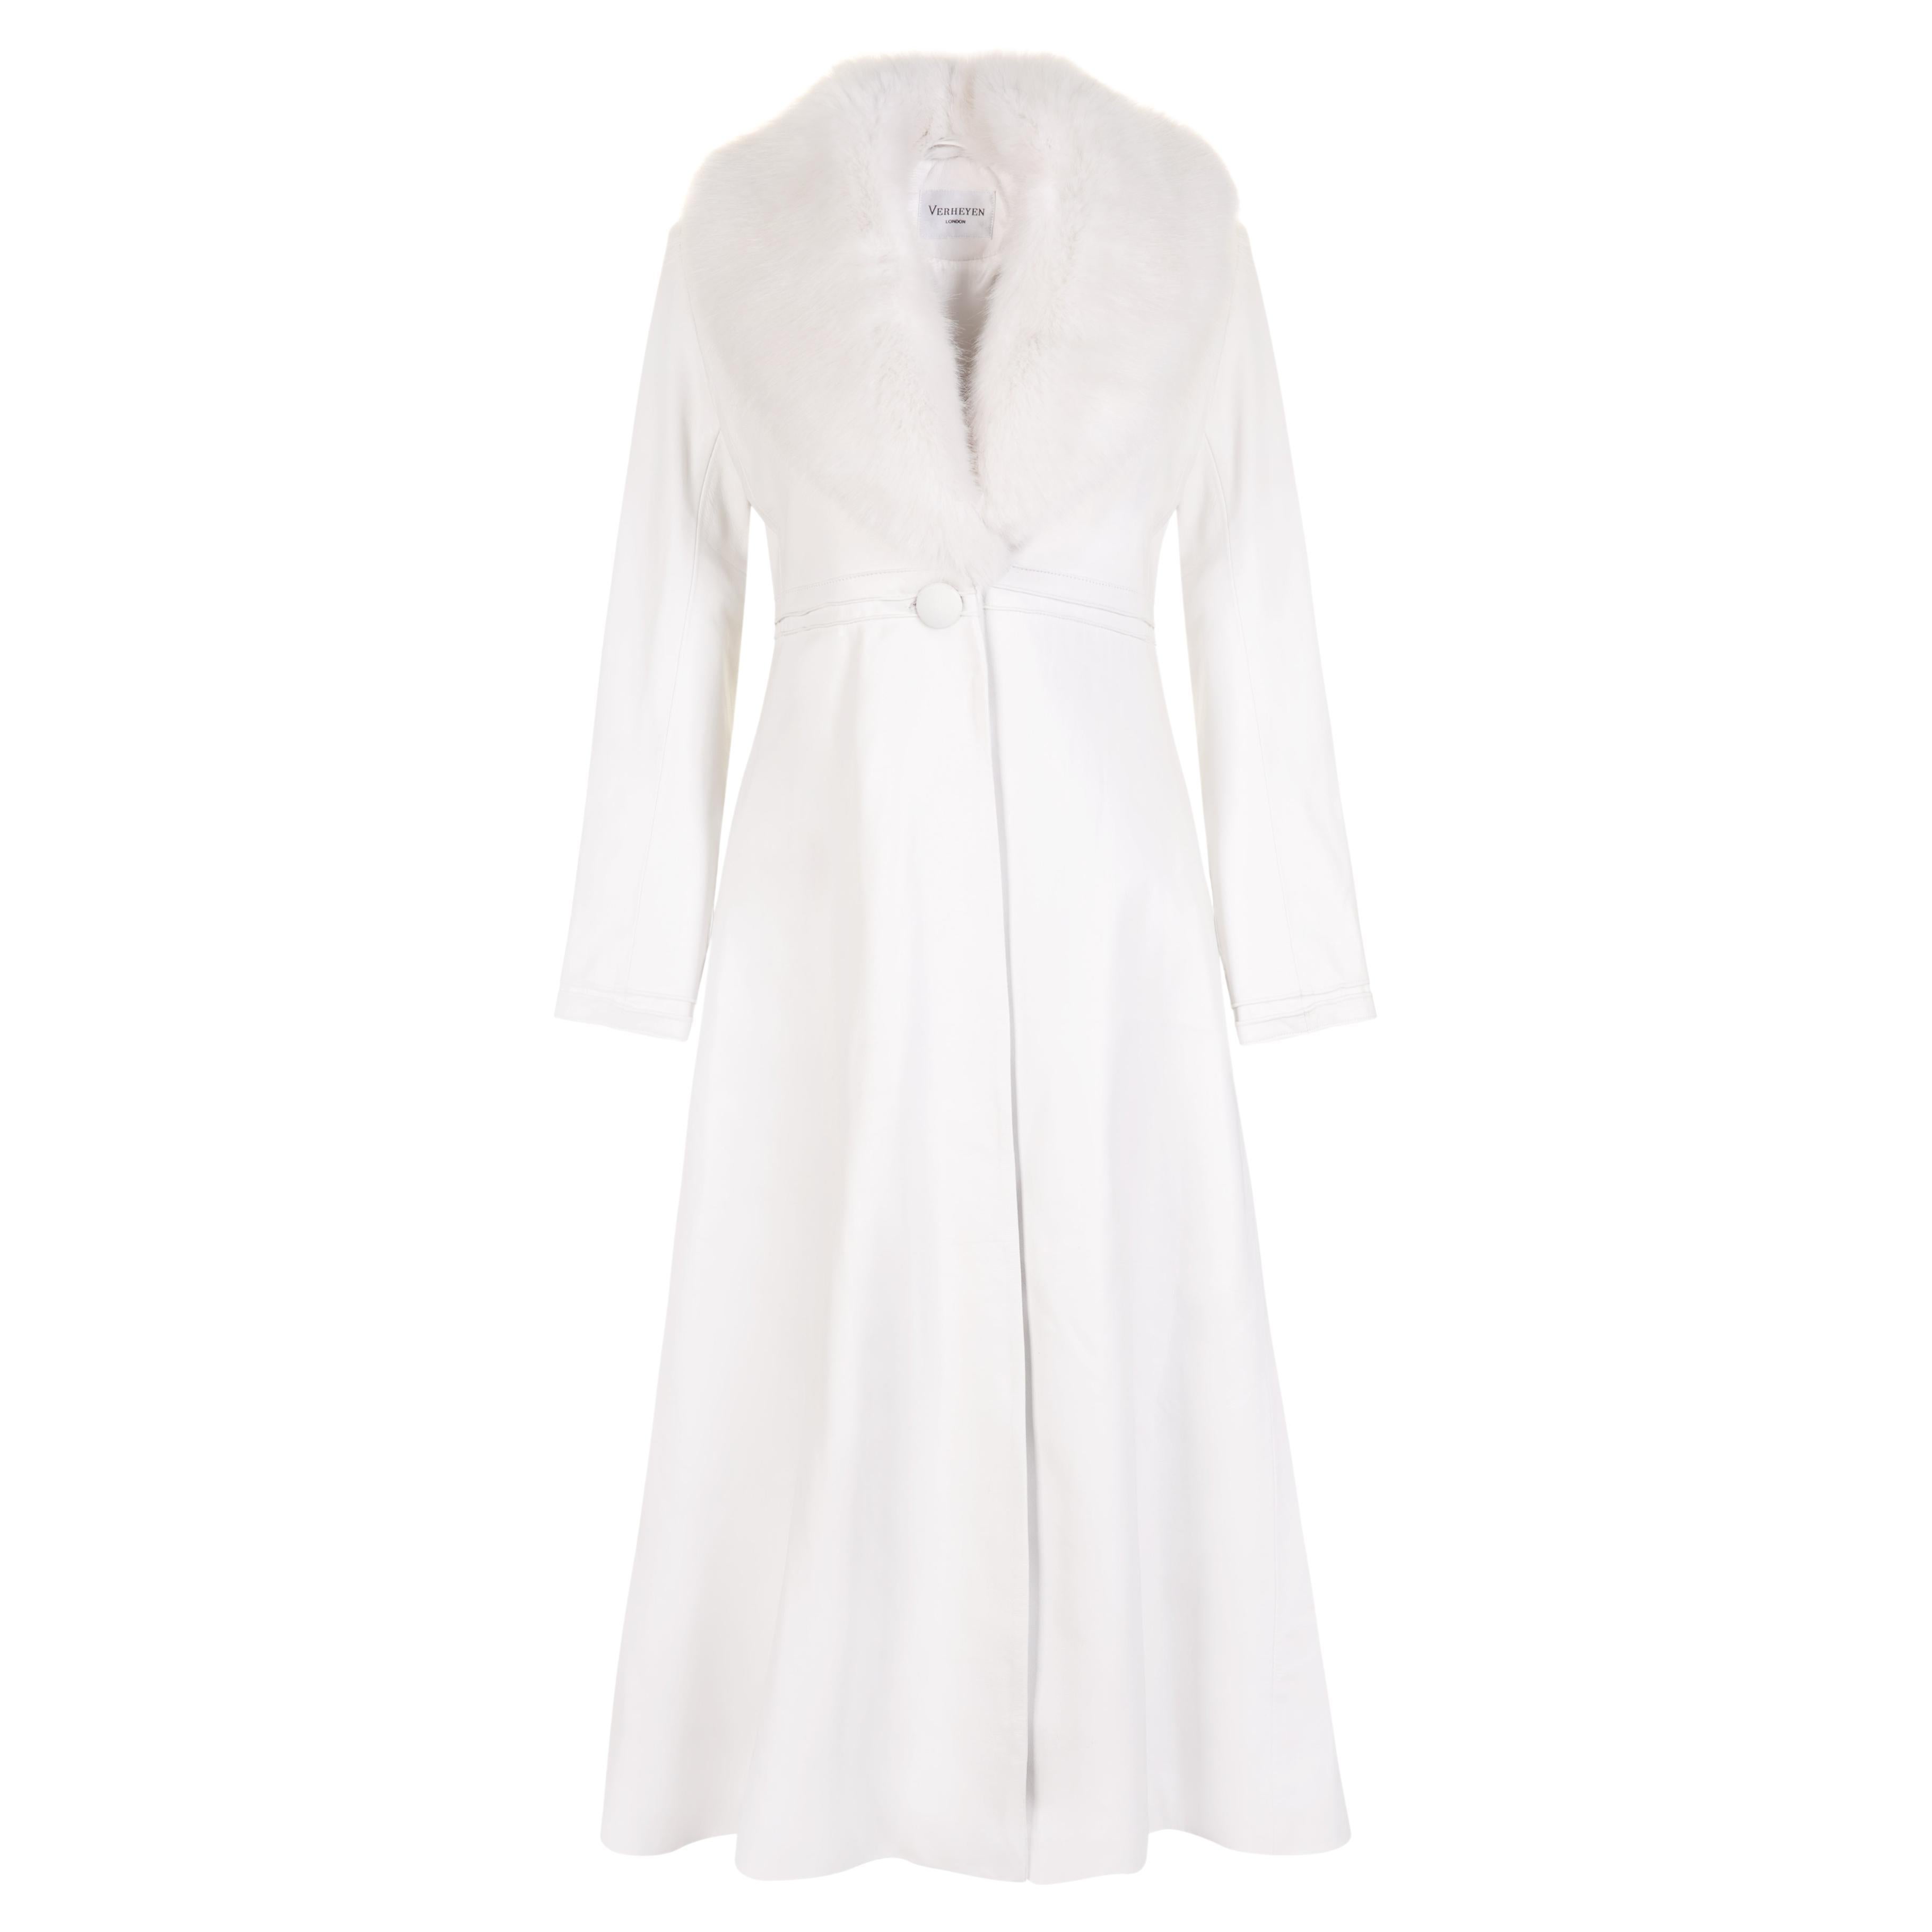 Verheyen London Edward Leather Coat in White with Faux Fur - Size uk 12  For Sale